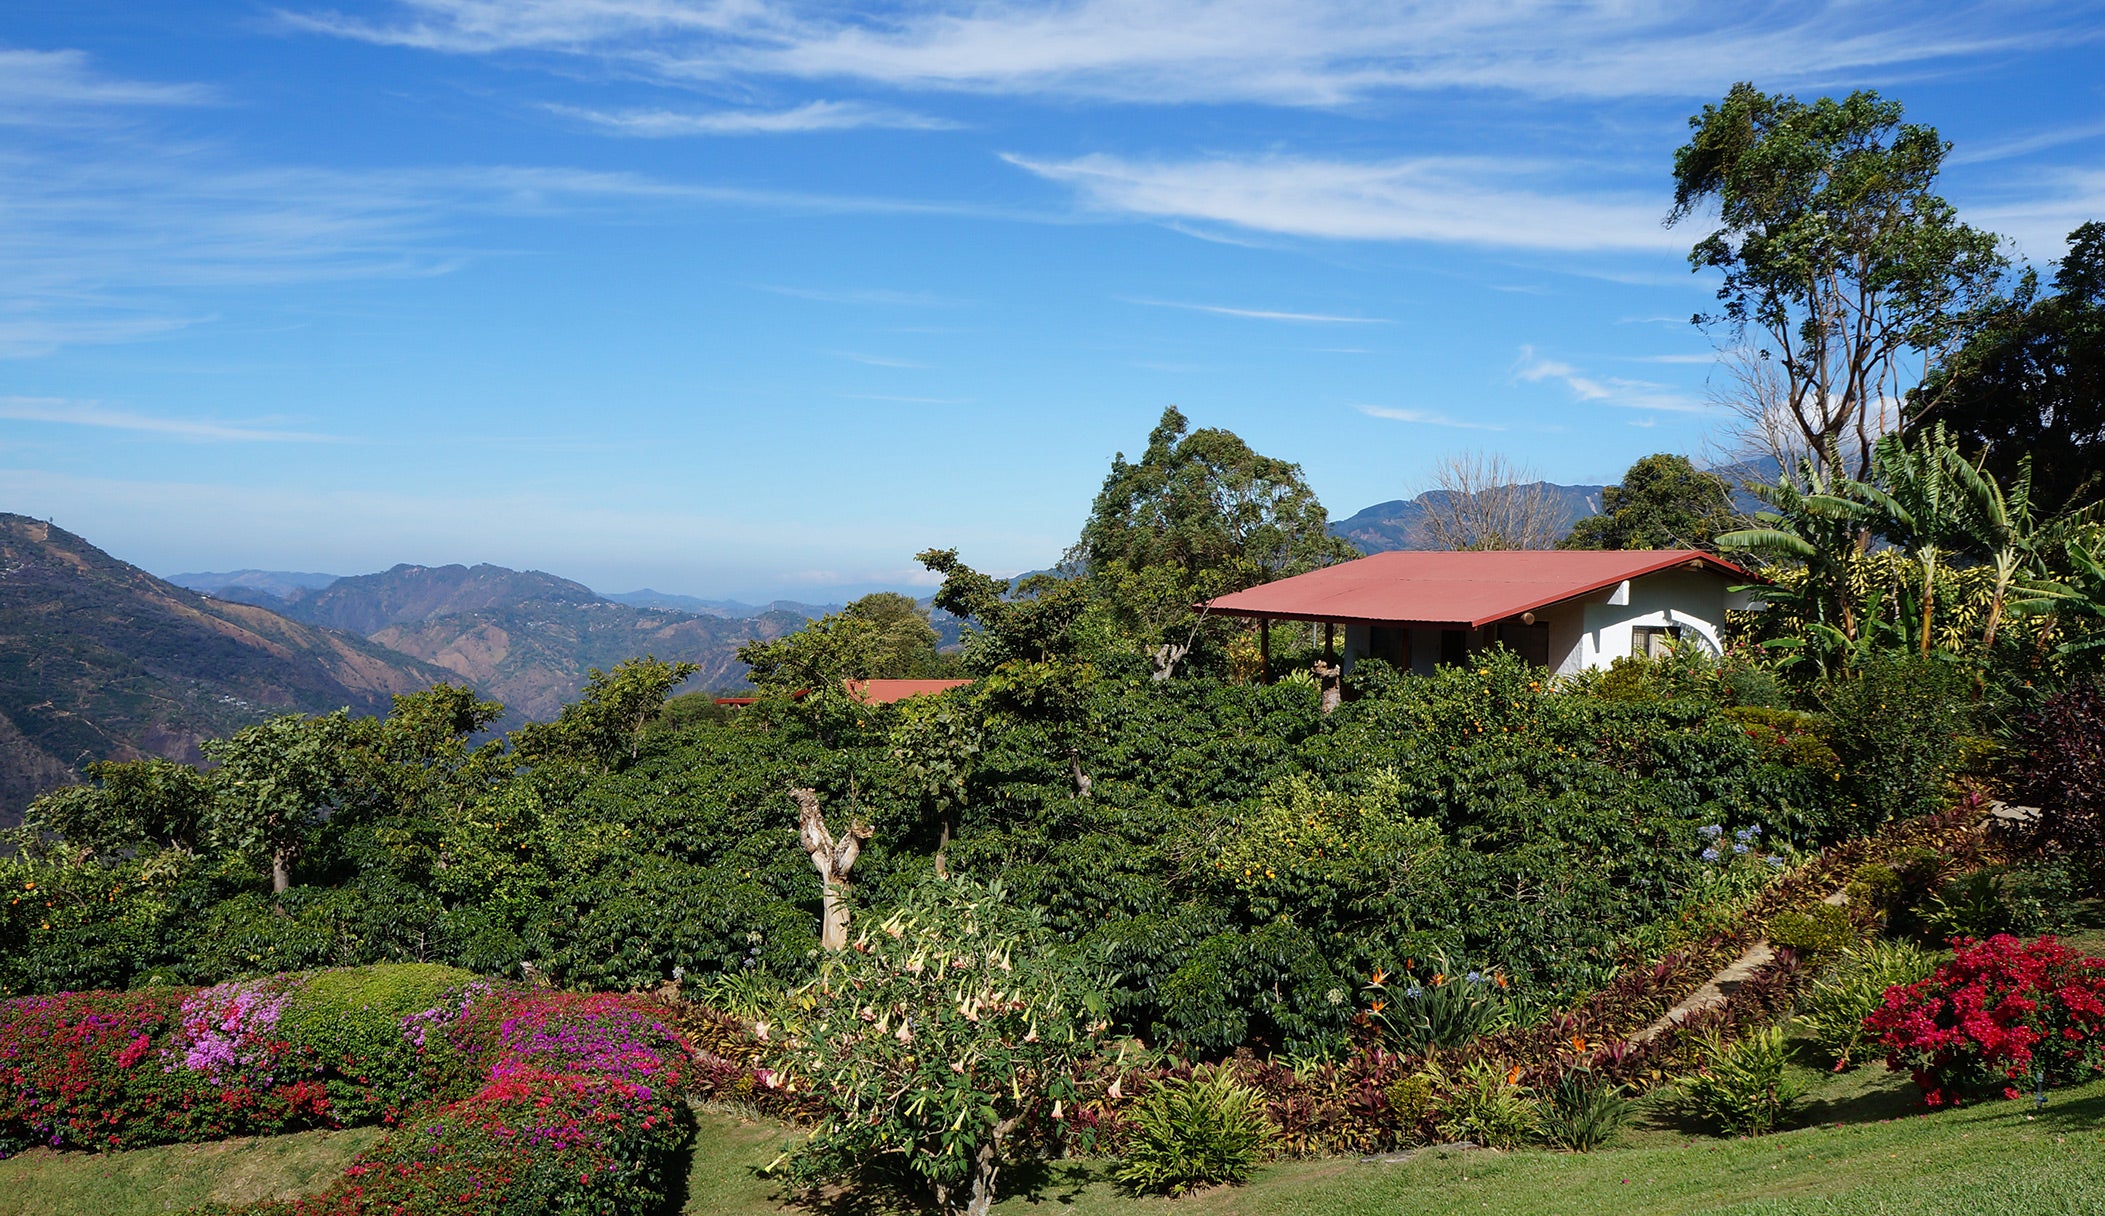 la minita costa rican farm views with house overlooking hills